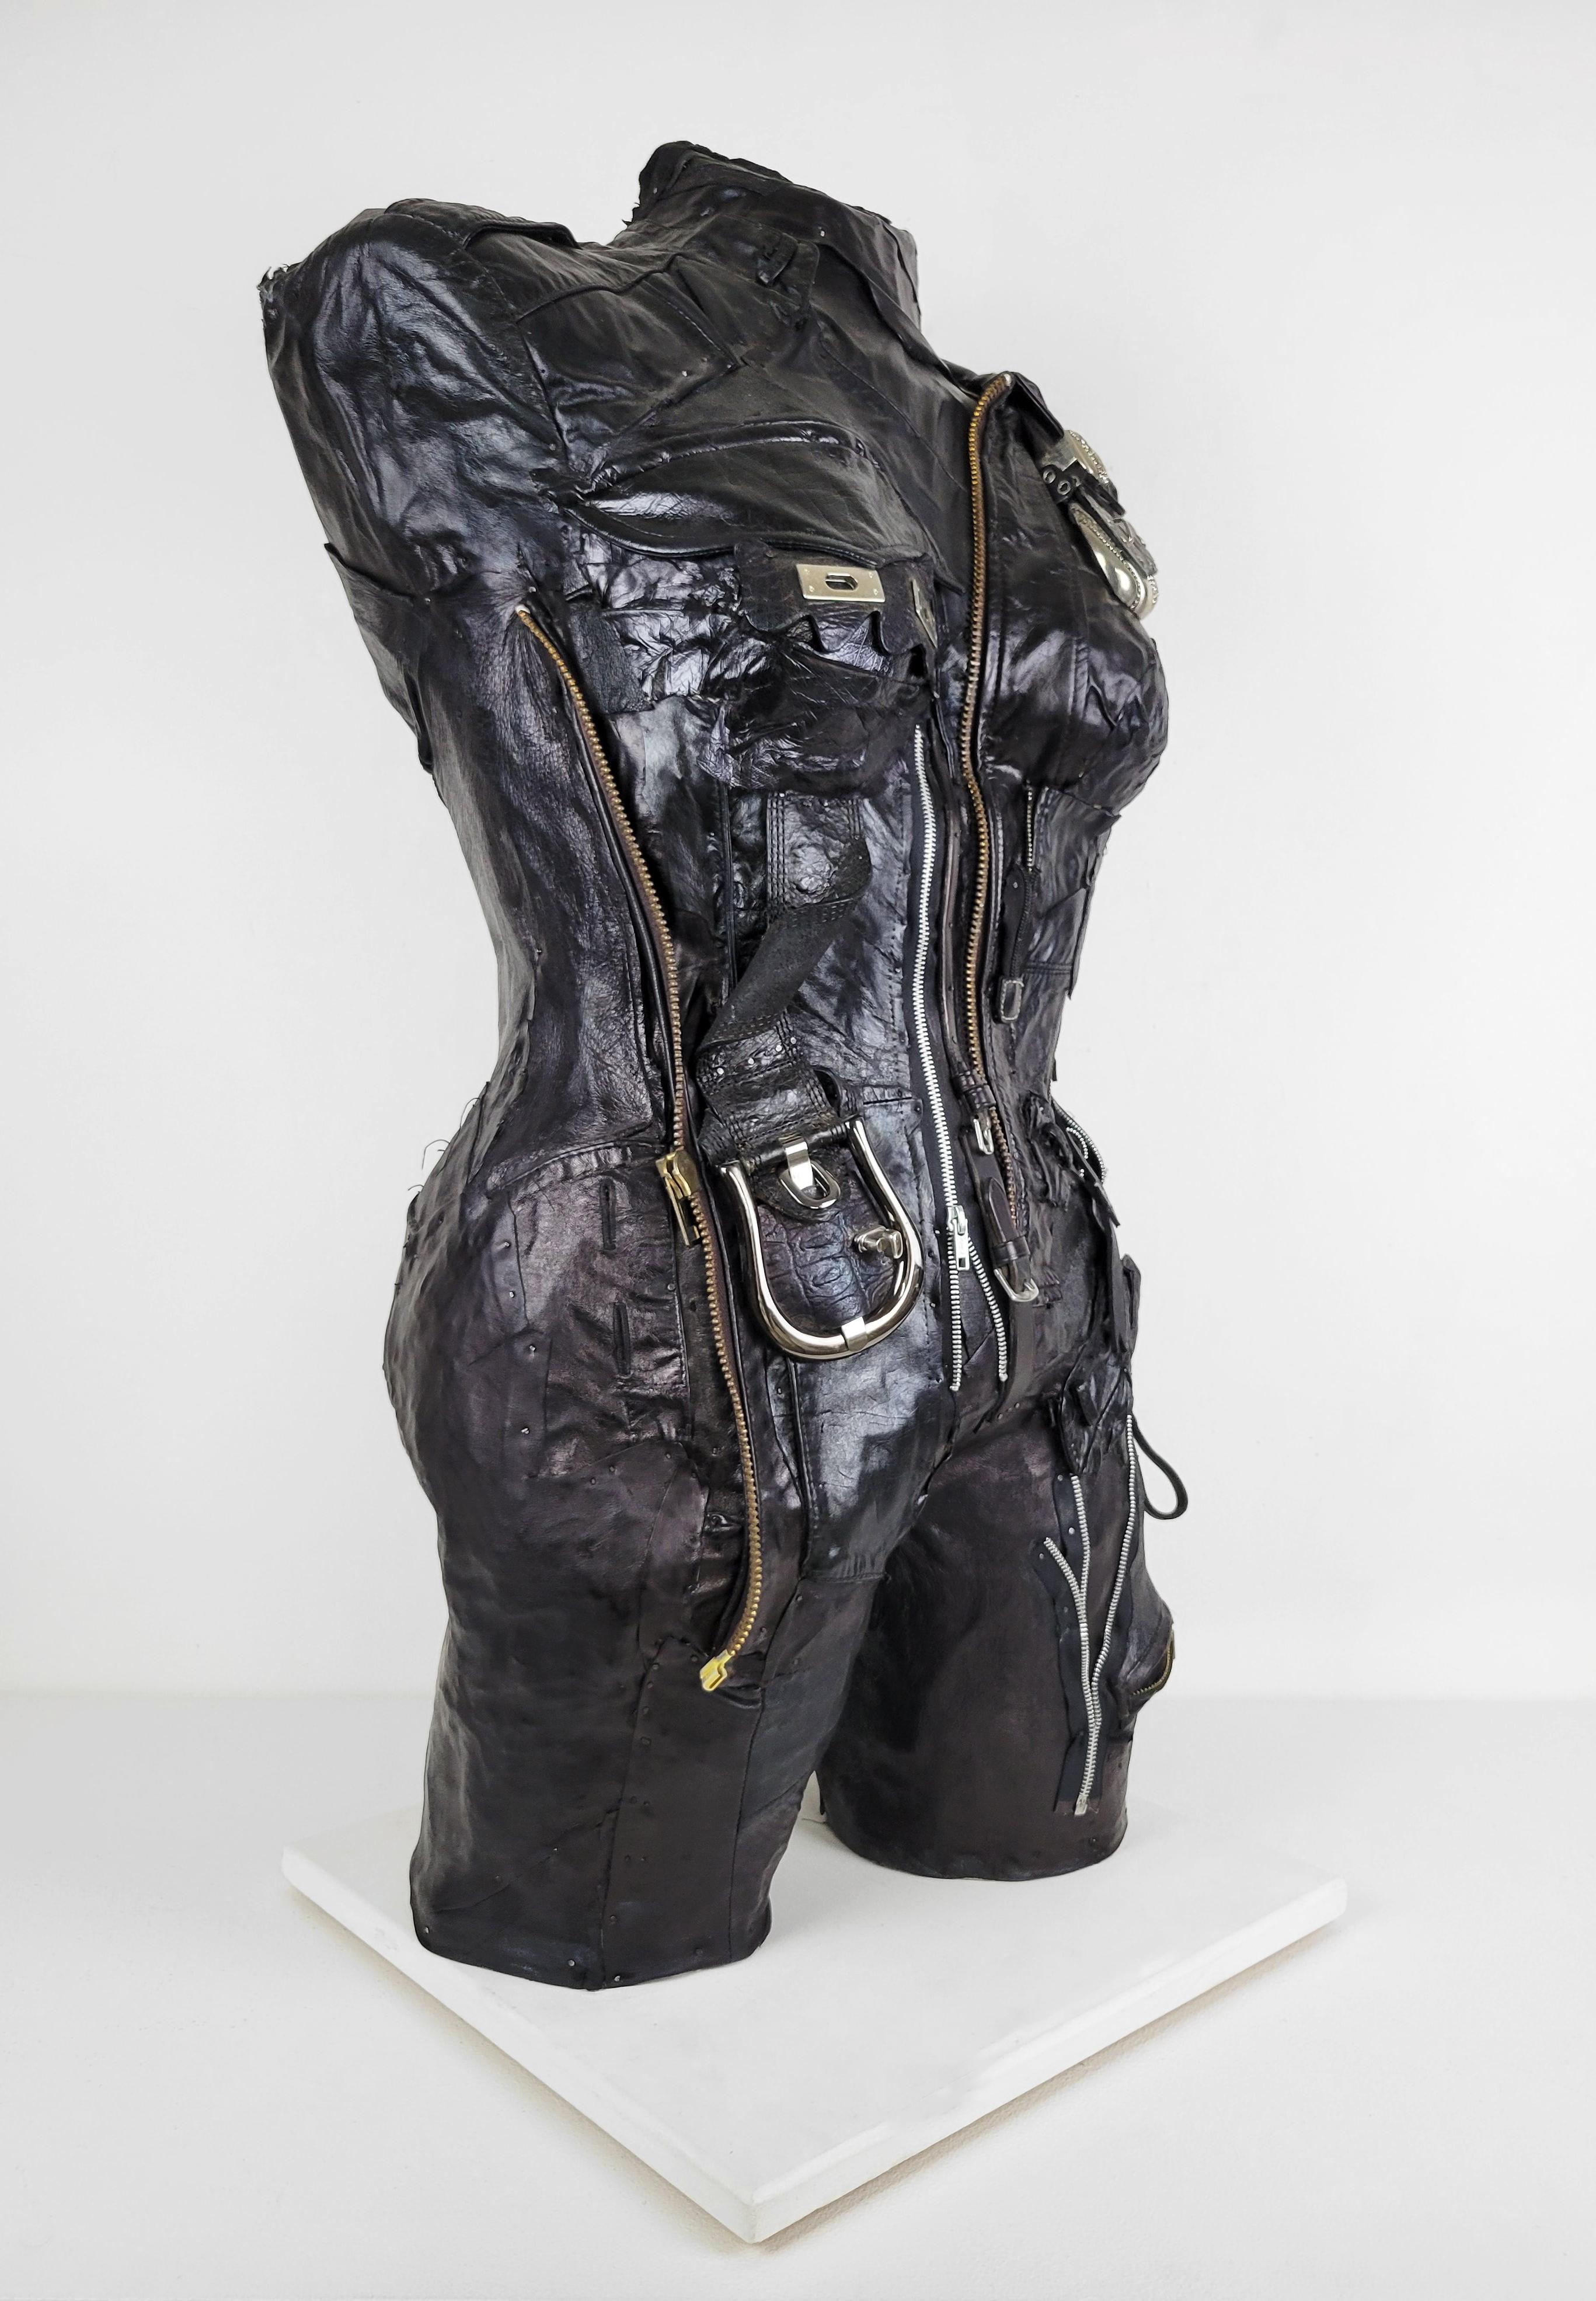 Feminist Contemporary Black/Silver Leather Metal Torso Sculpture - On Alert 691  For Sale 3